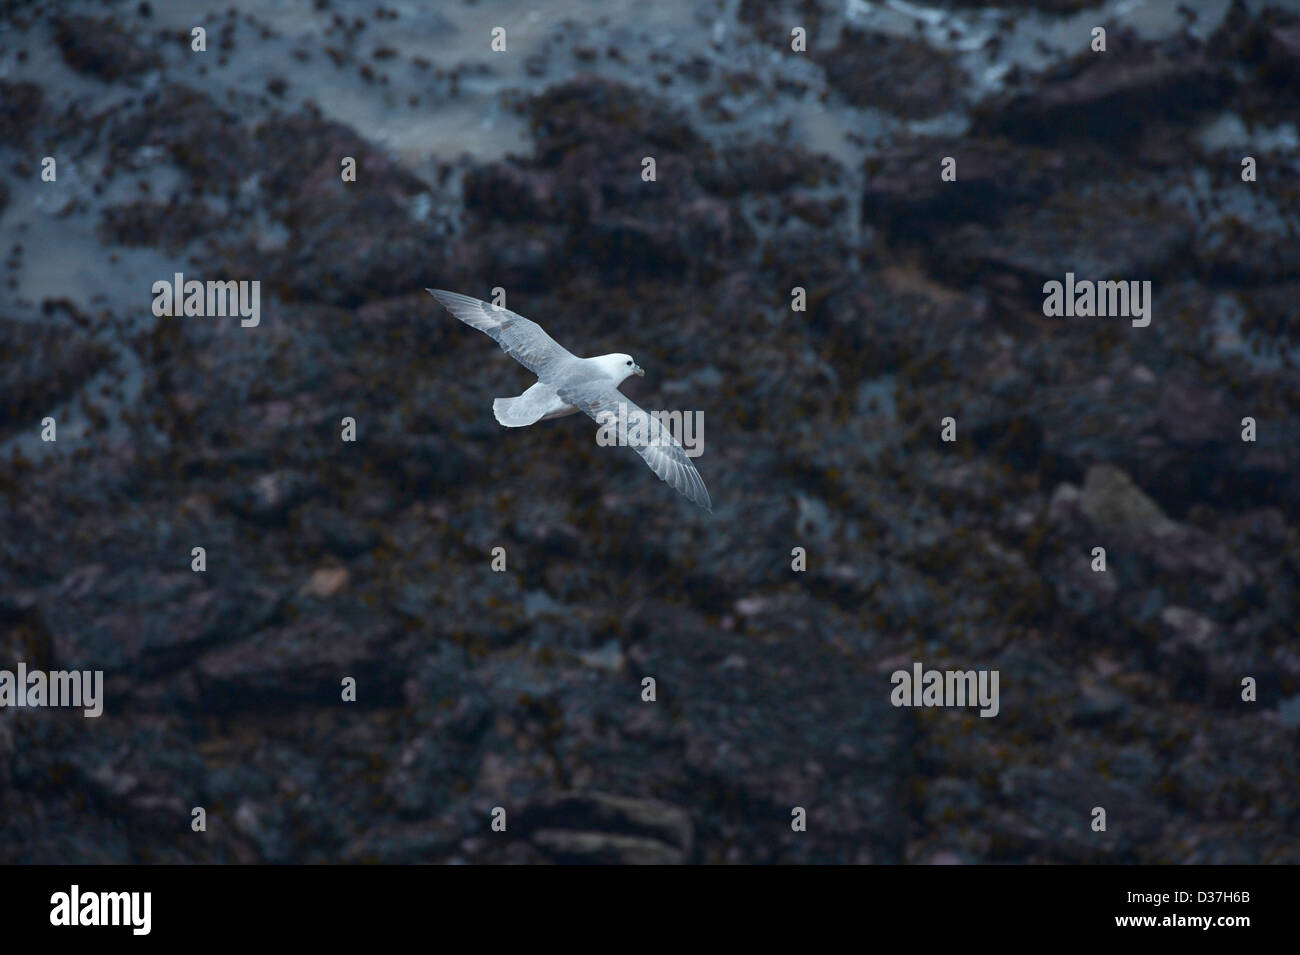 A Fulmar bird in flight (Fulmarus glacialis) Along its natural habitat Stock Photo